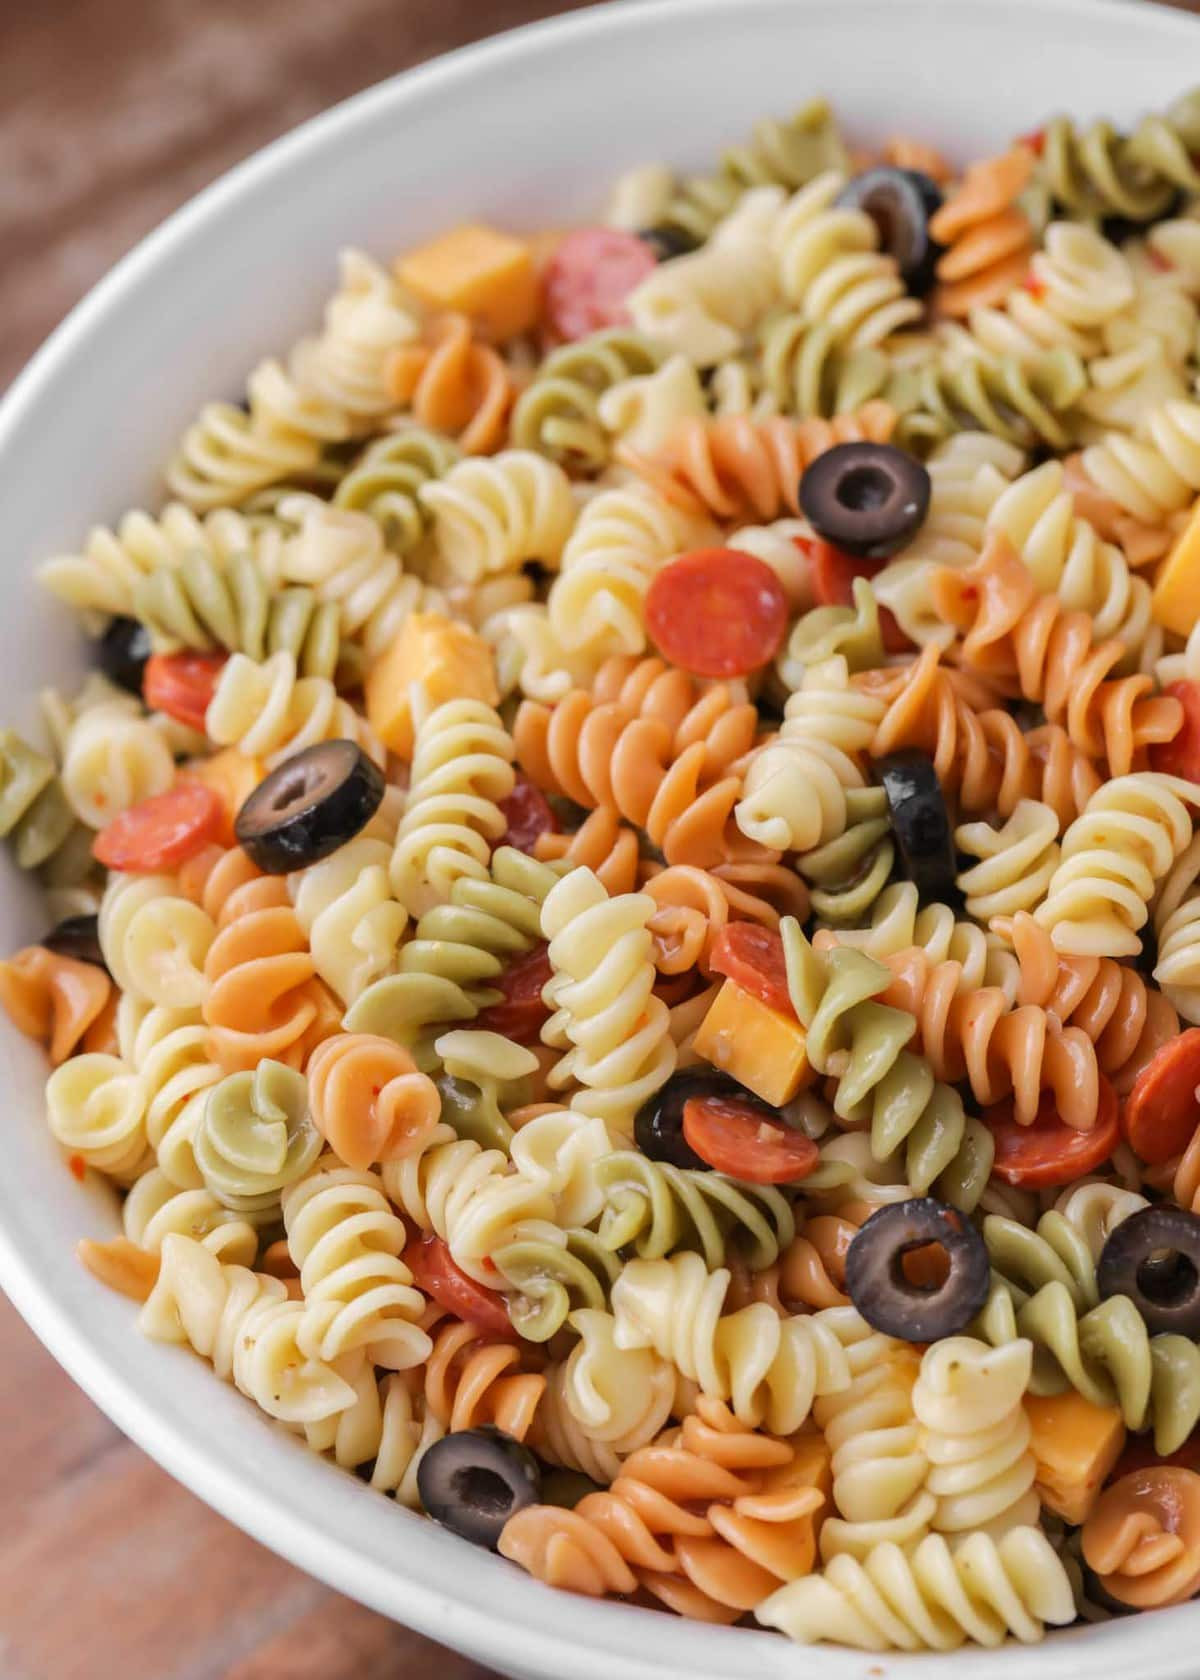 Recipe For Pasta Salad With Italian Dressing
 Easy Pasta Salad Recipe with Italian Dressing VIDEO